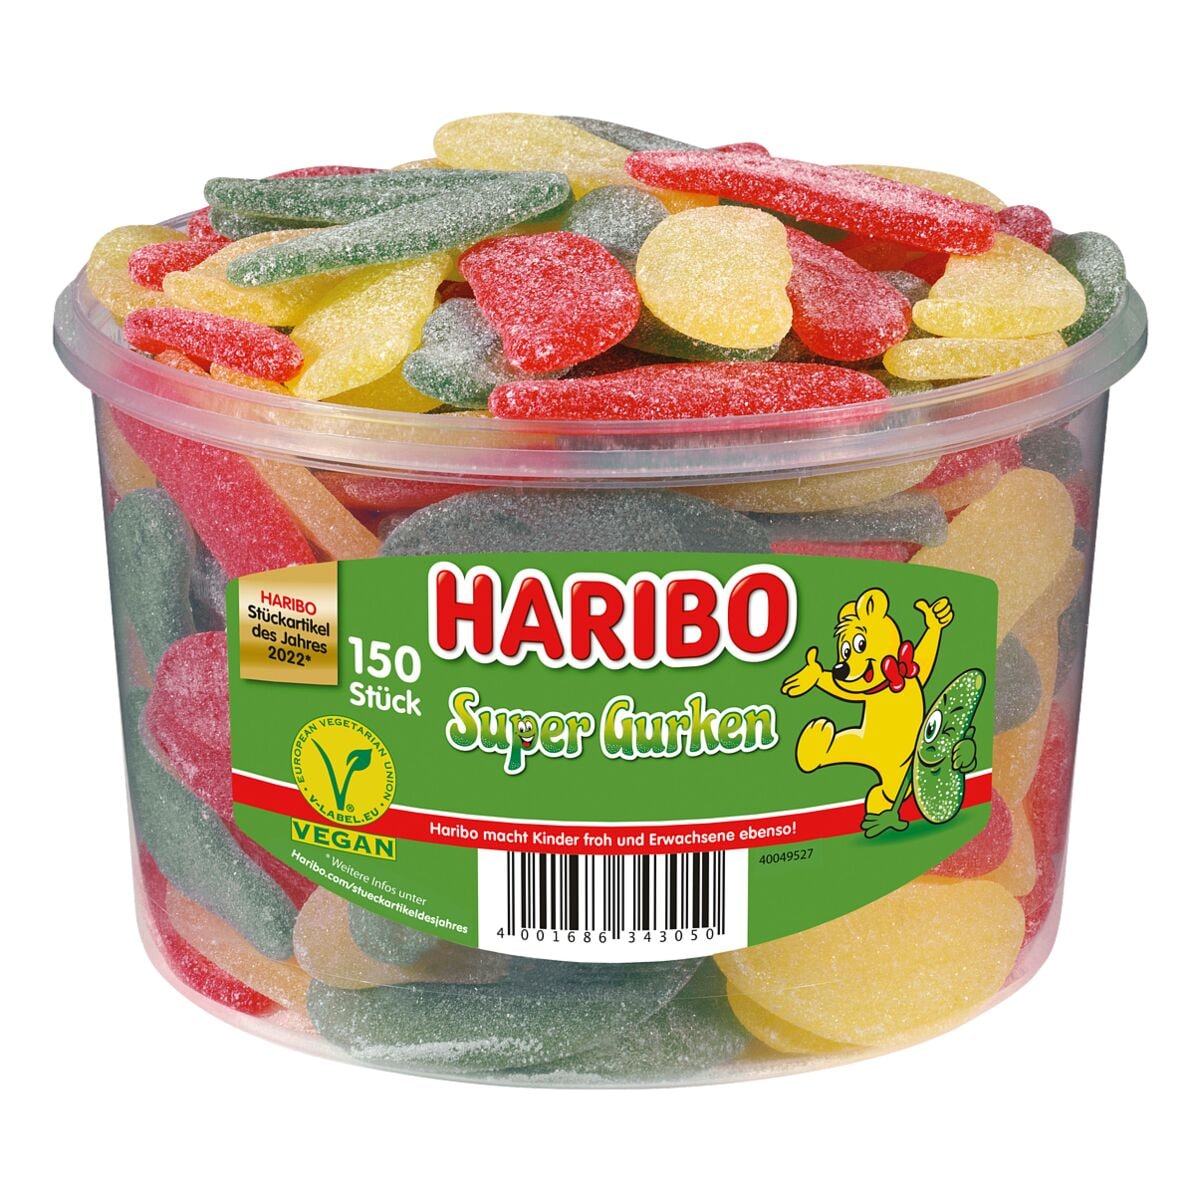 Haribo Fruchtgummi Super Gurken